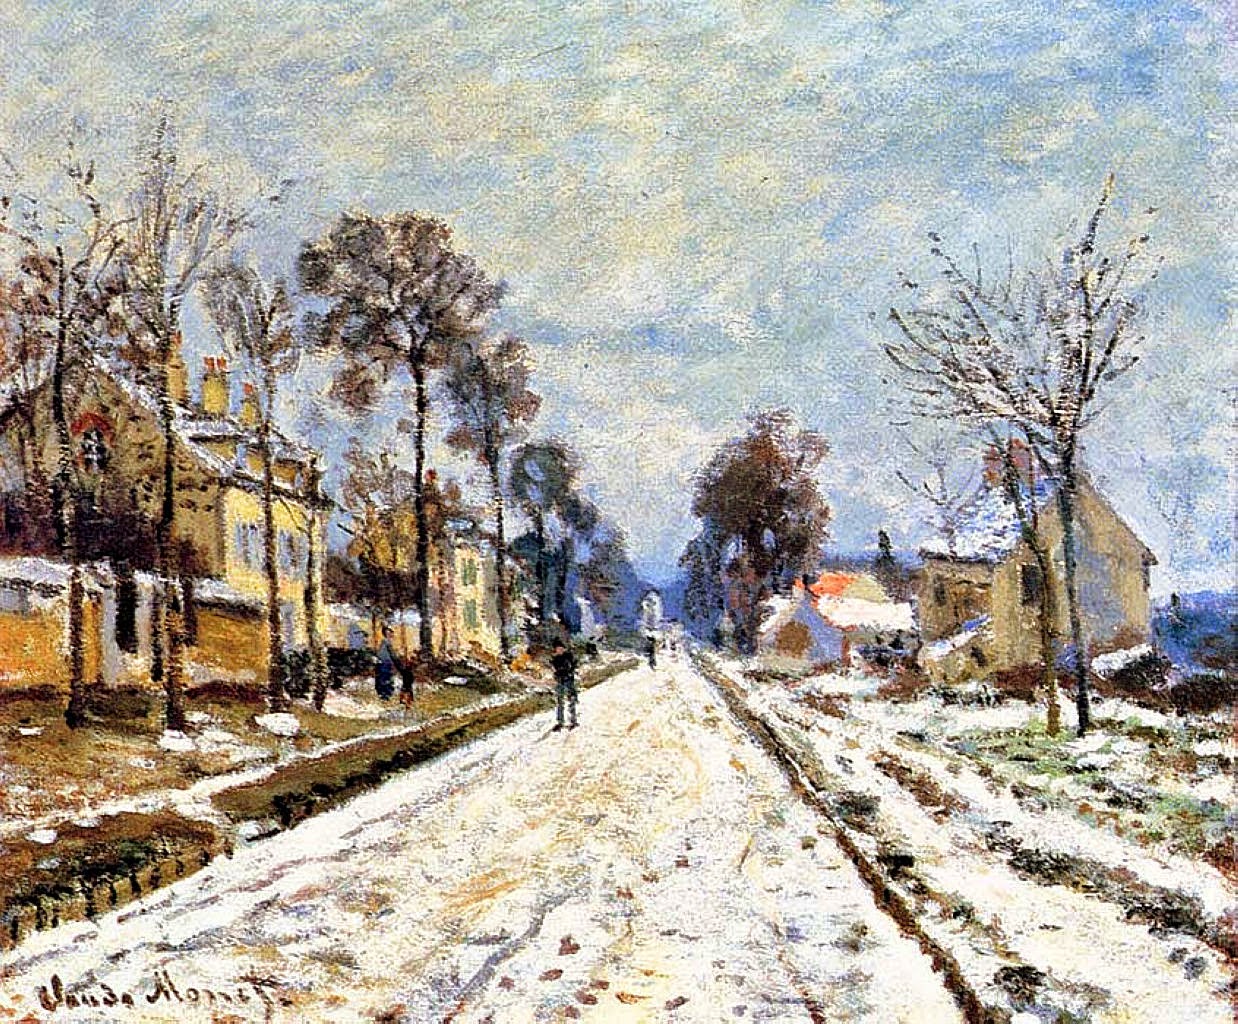 Claude+Monet-1840-1926 (60).jpg